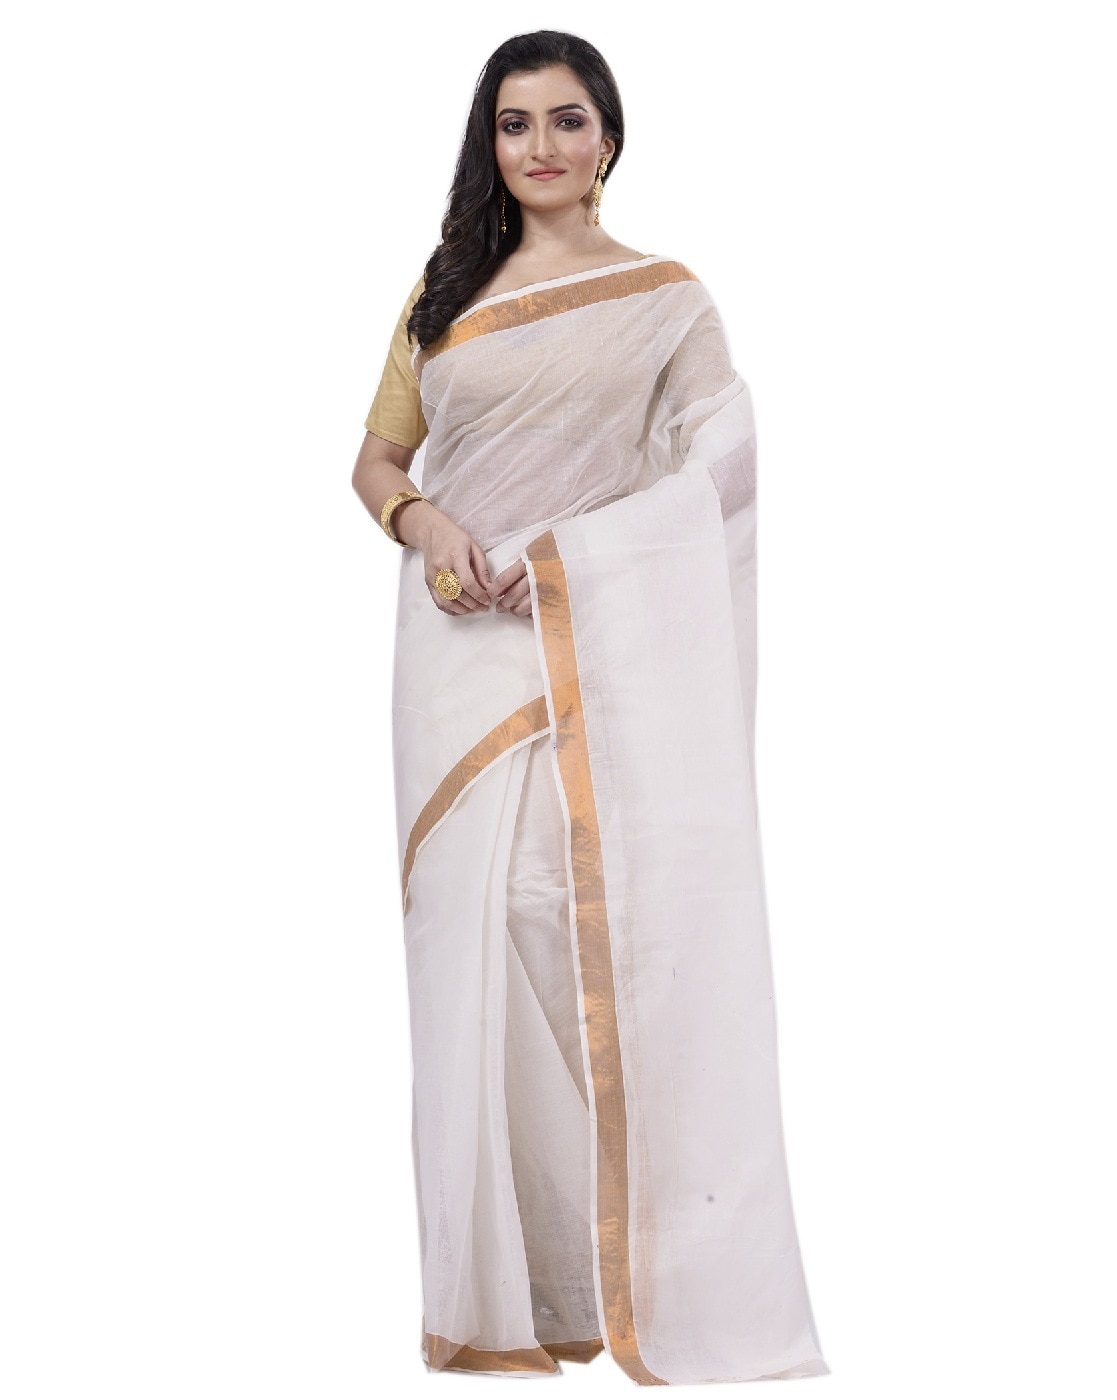 Chiffon Sarees: Flaunt-worthy chiffon sarees to buy | - Times of India